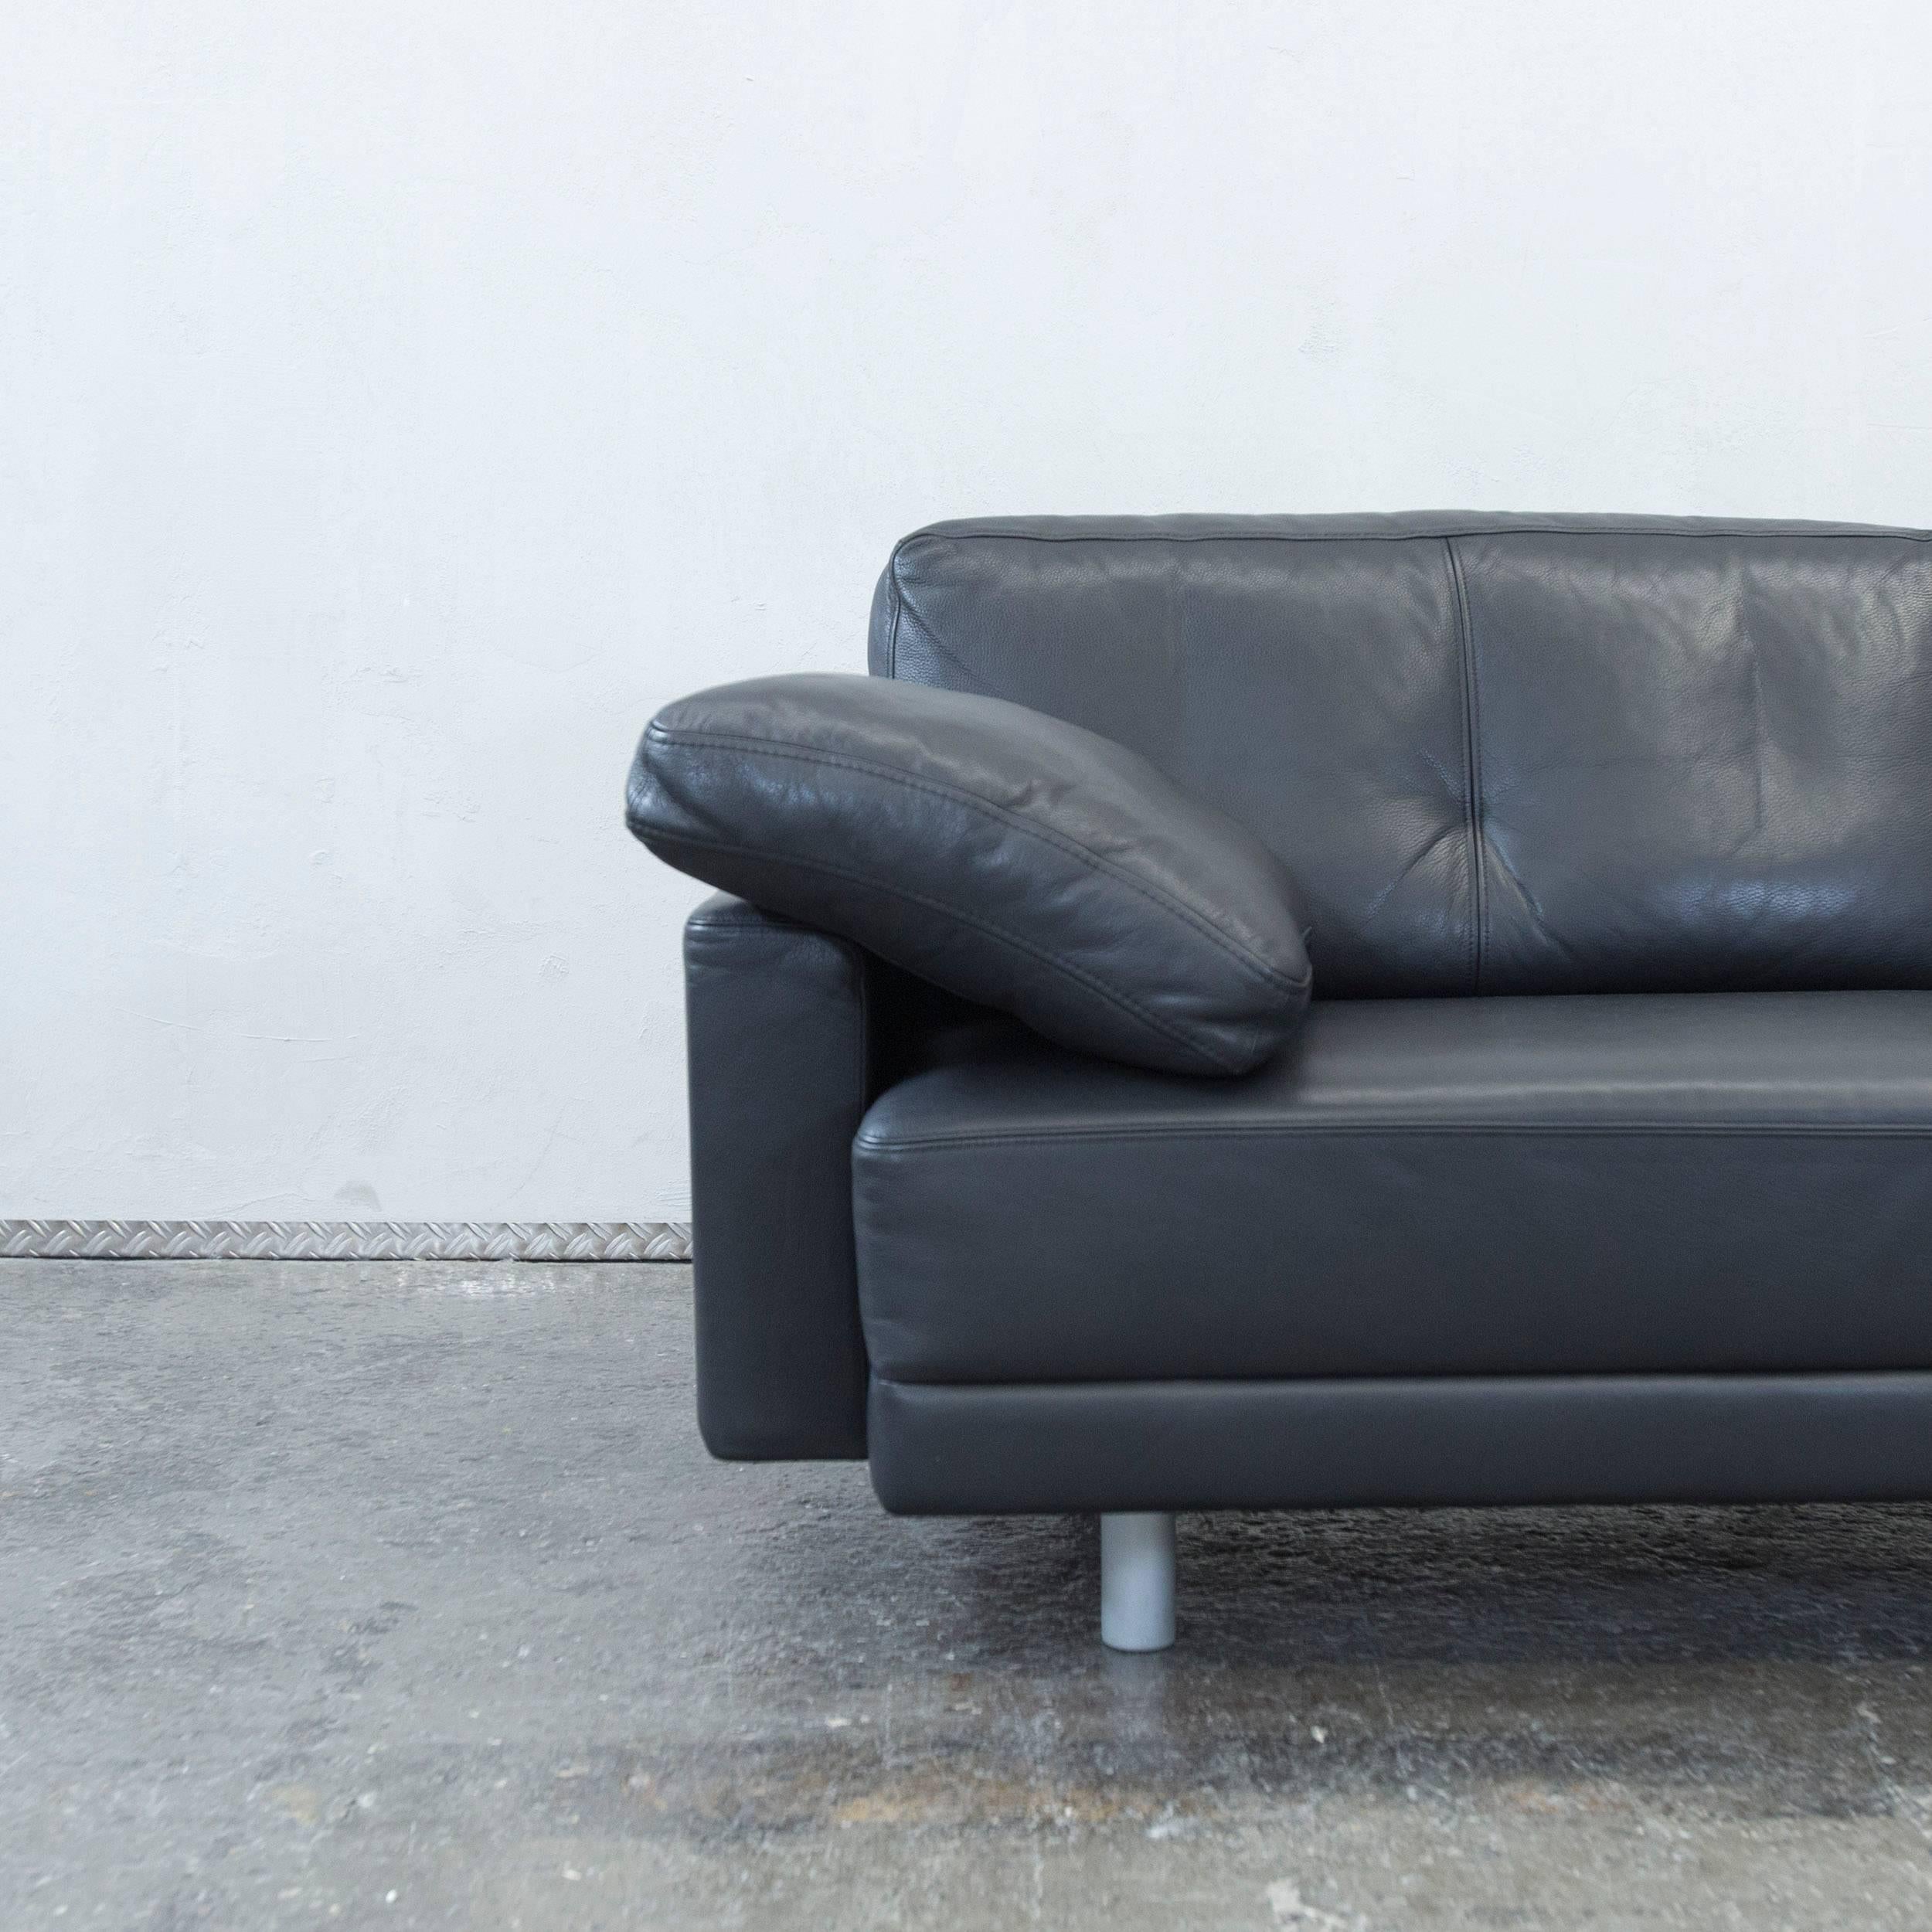 Black colored original Brühl Alba designer leather sofa in a minimalistic and modern design, made for pure comfort.